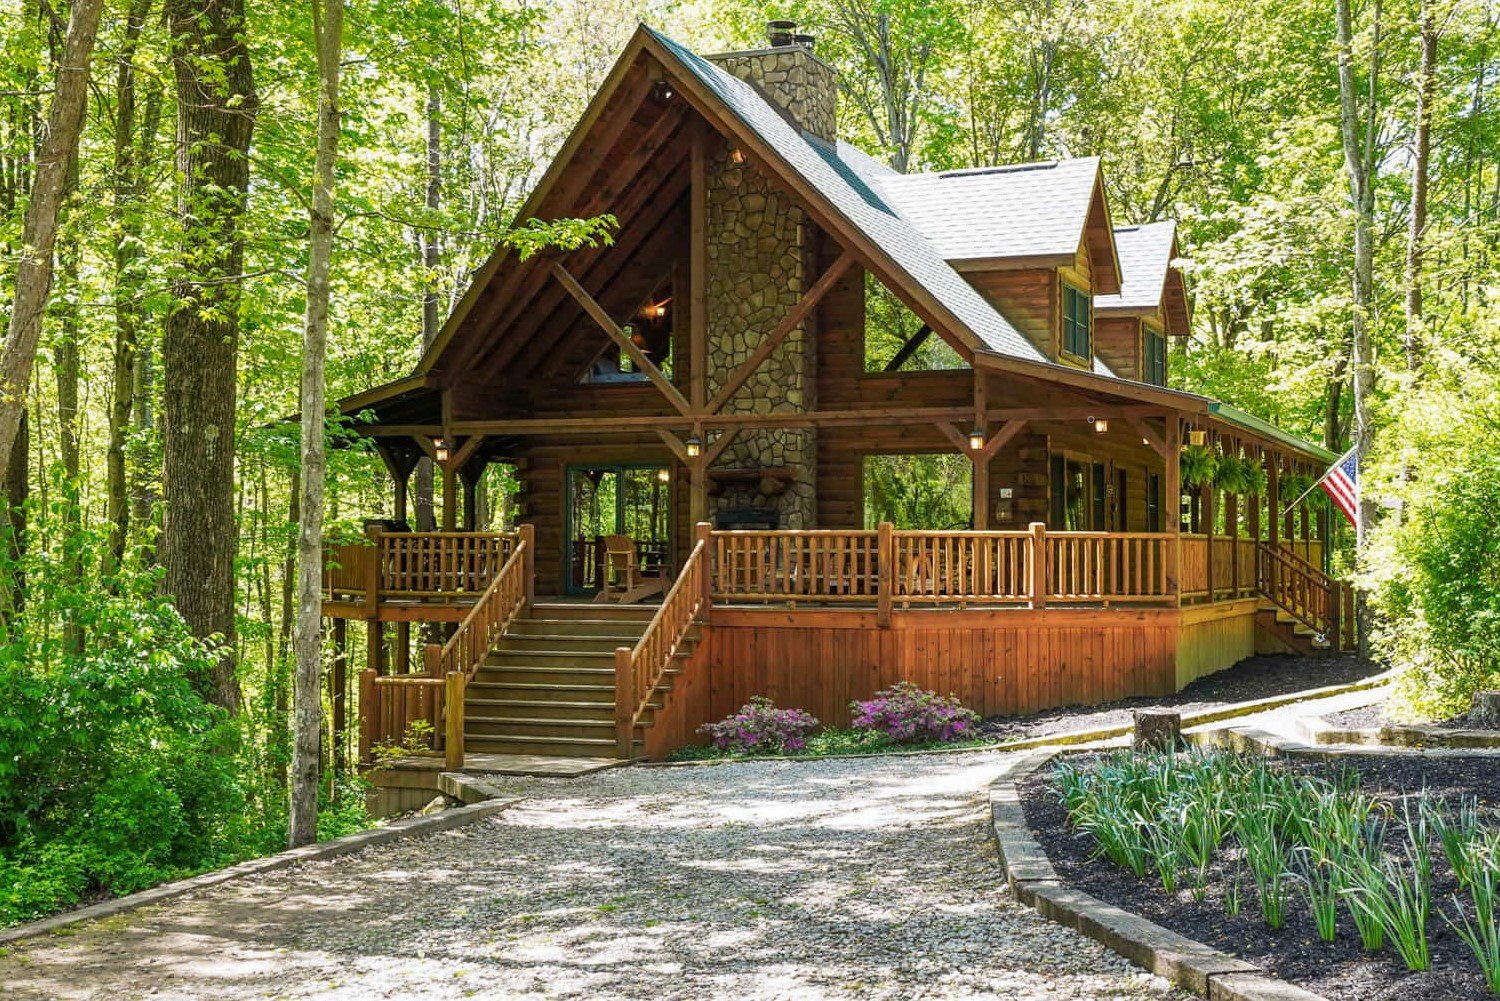 Redwood Lodge in Hocking Hills, Ohio